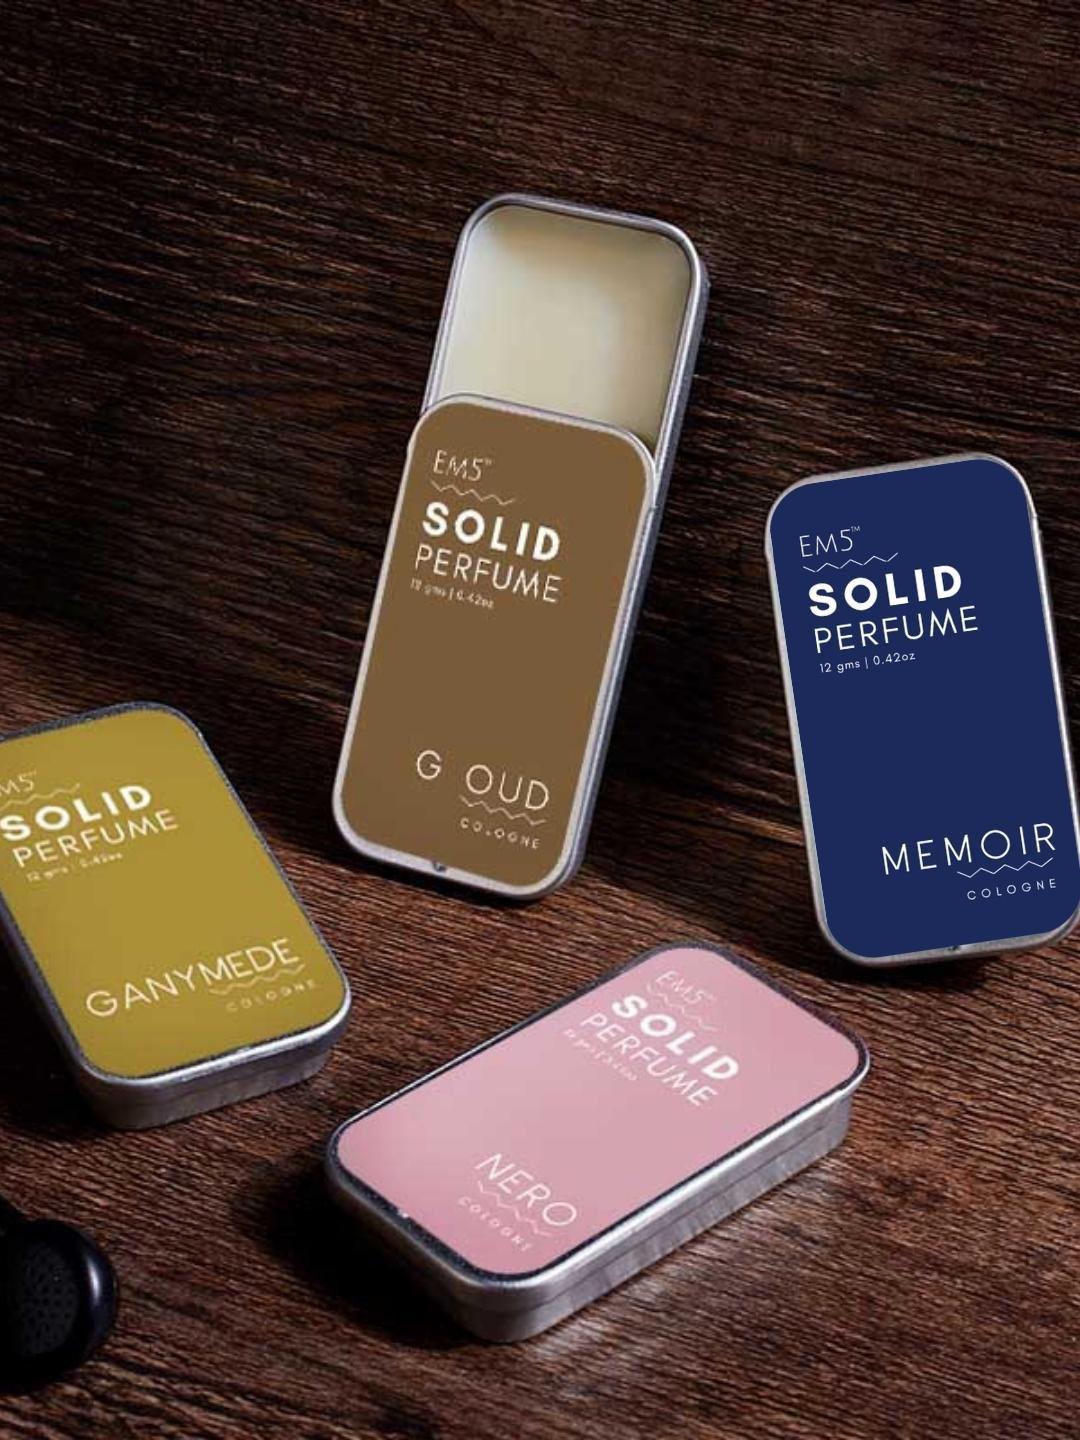 em5 solid set of 4 memoir-ganymede -g oud-nero cologne perfume - 12g each